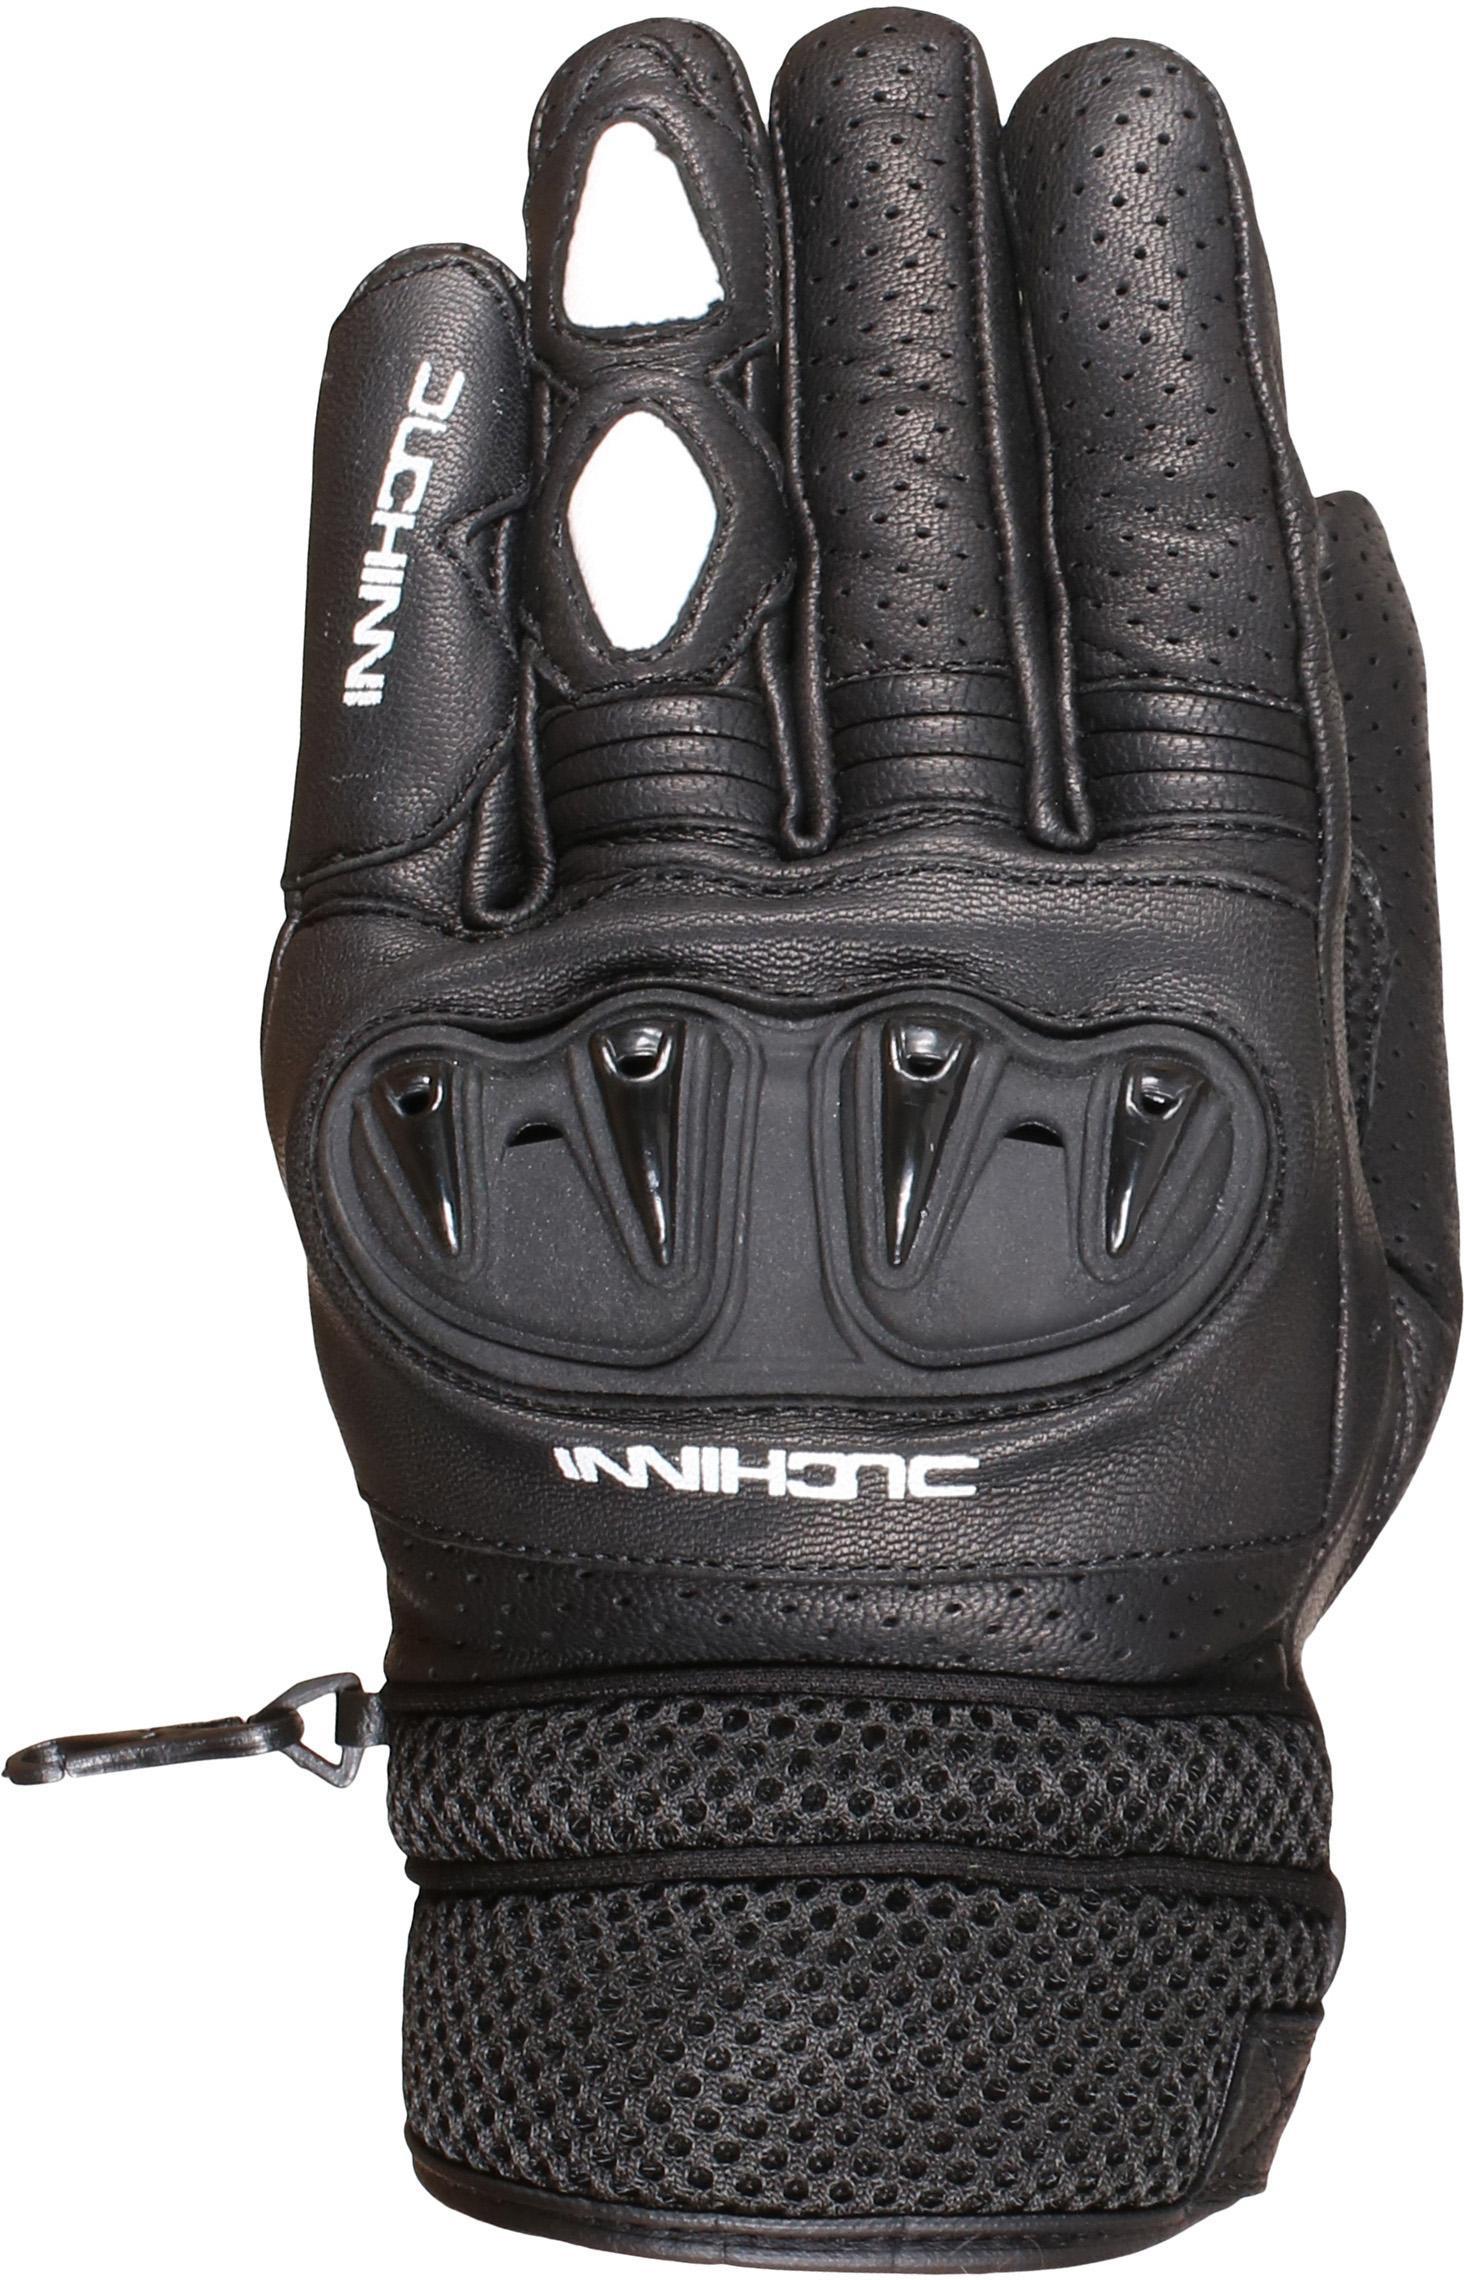 Duchinni Ostro Motorcycle Gloves - Black, S